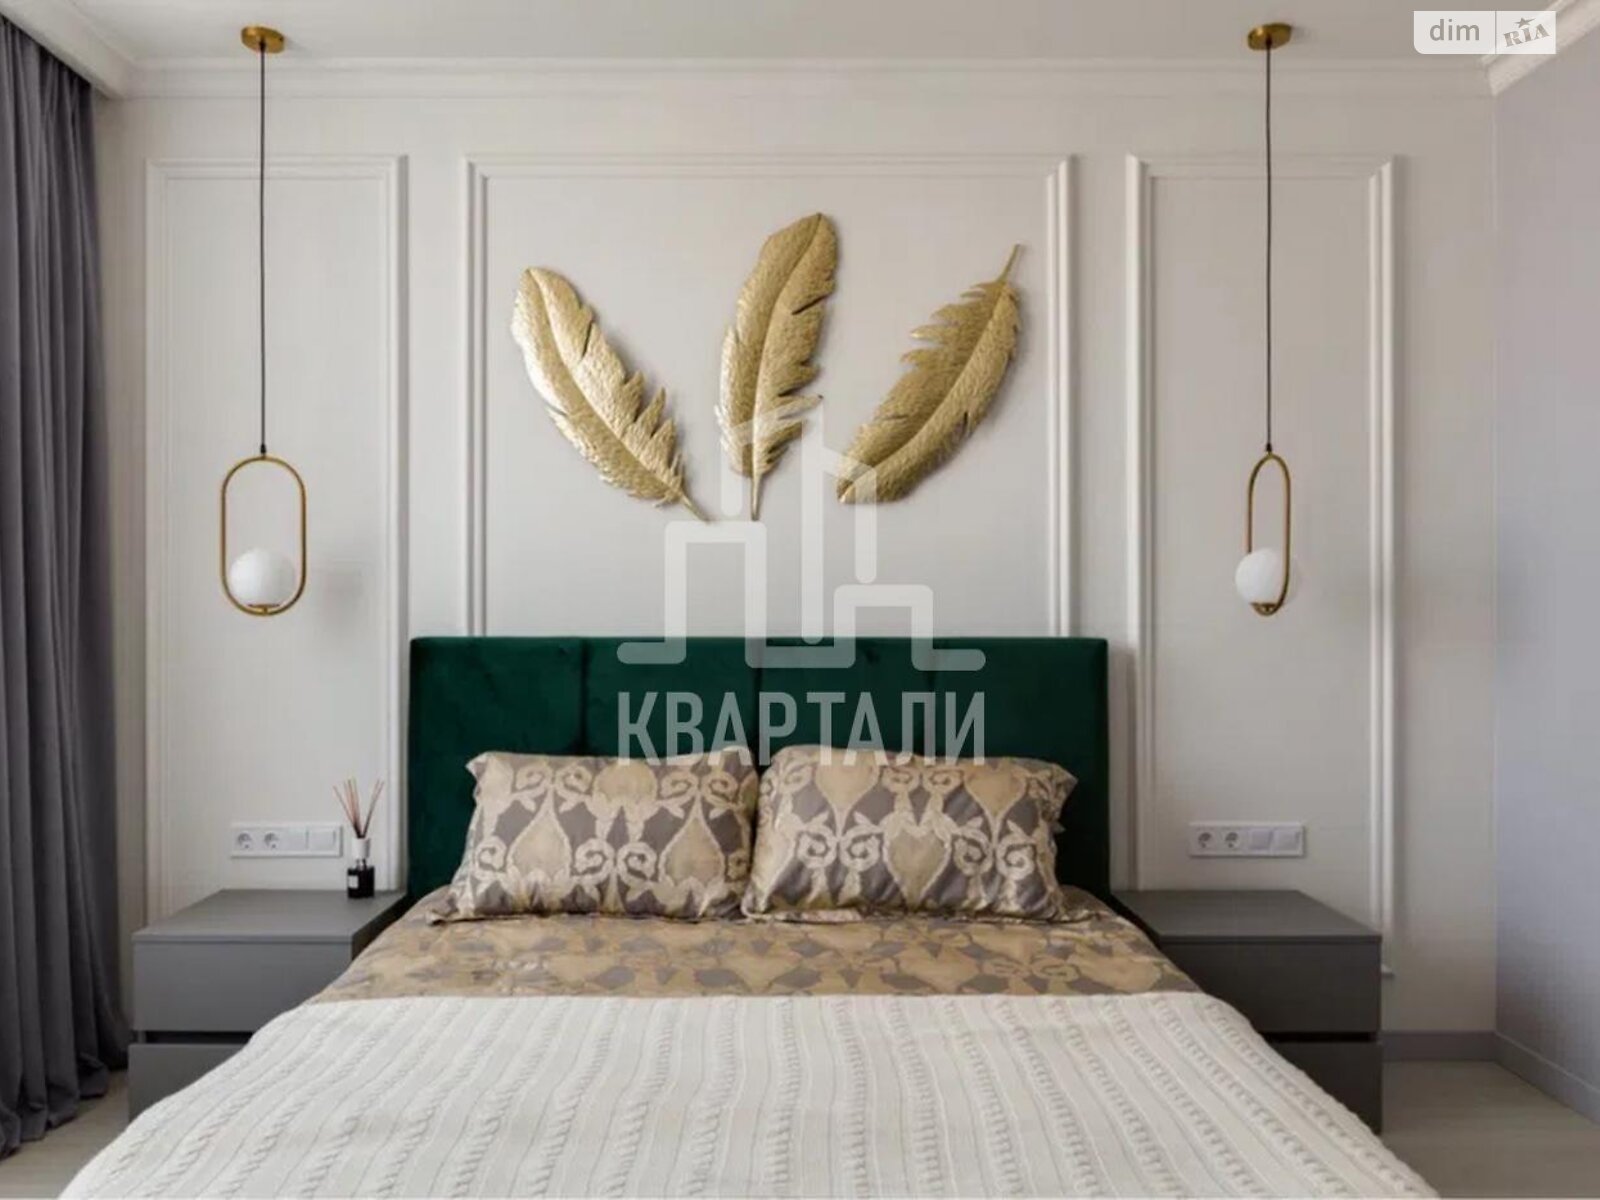 Продажа двухкомнатной квартиры в Киеве, на ул. Драгоманова 10, район Позняки фото 1